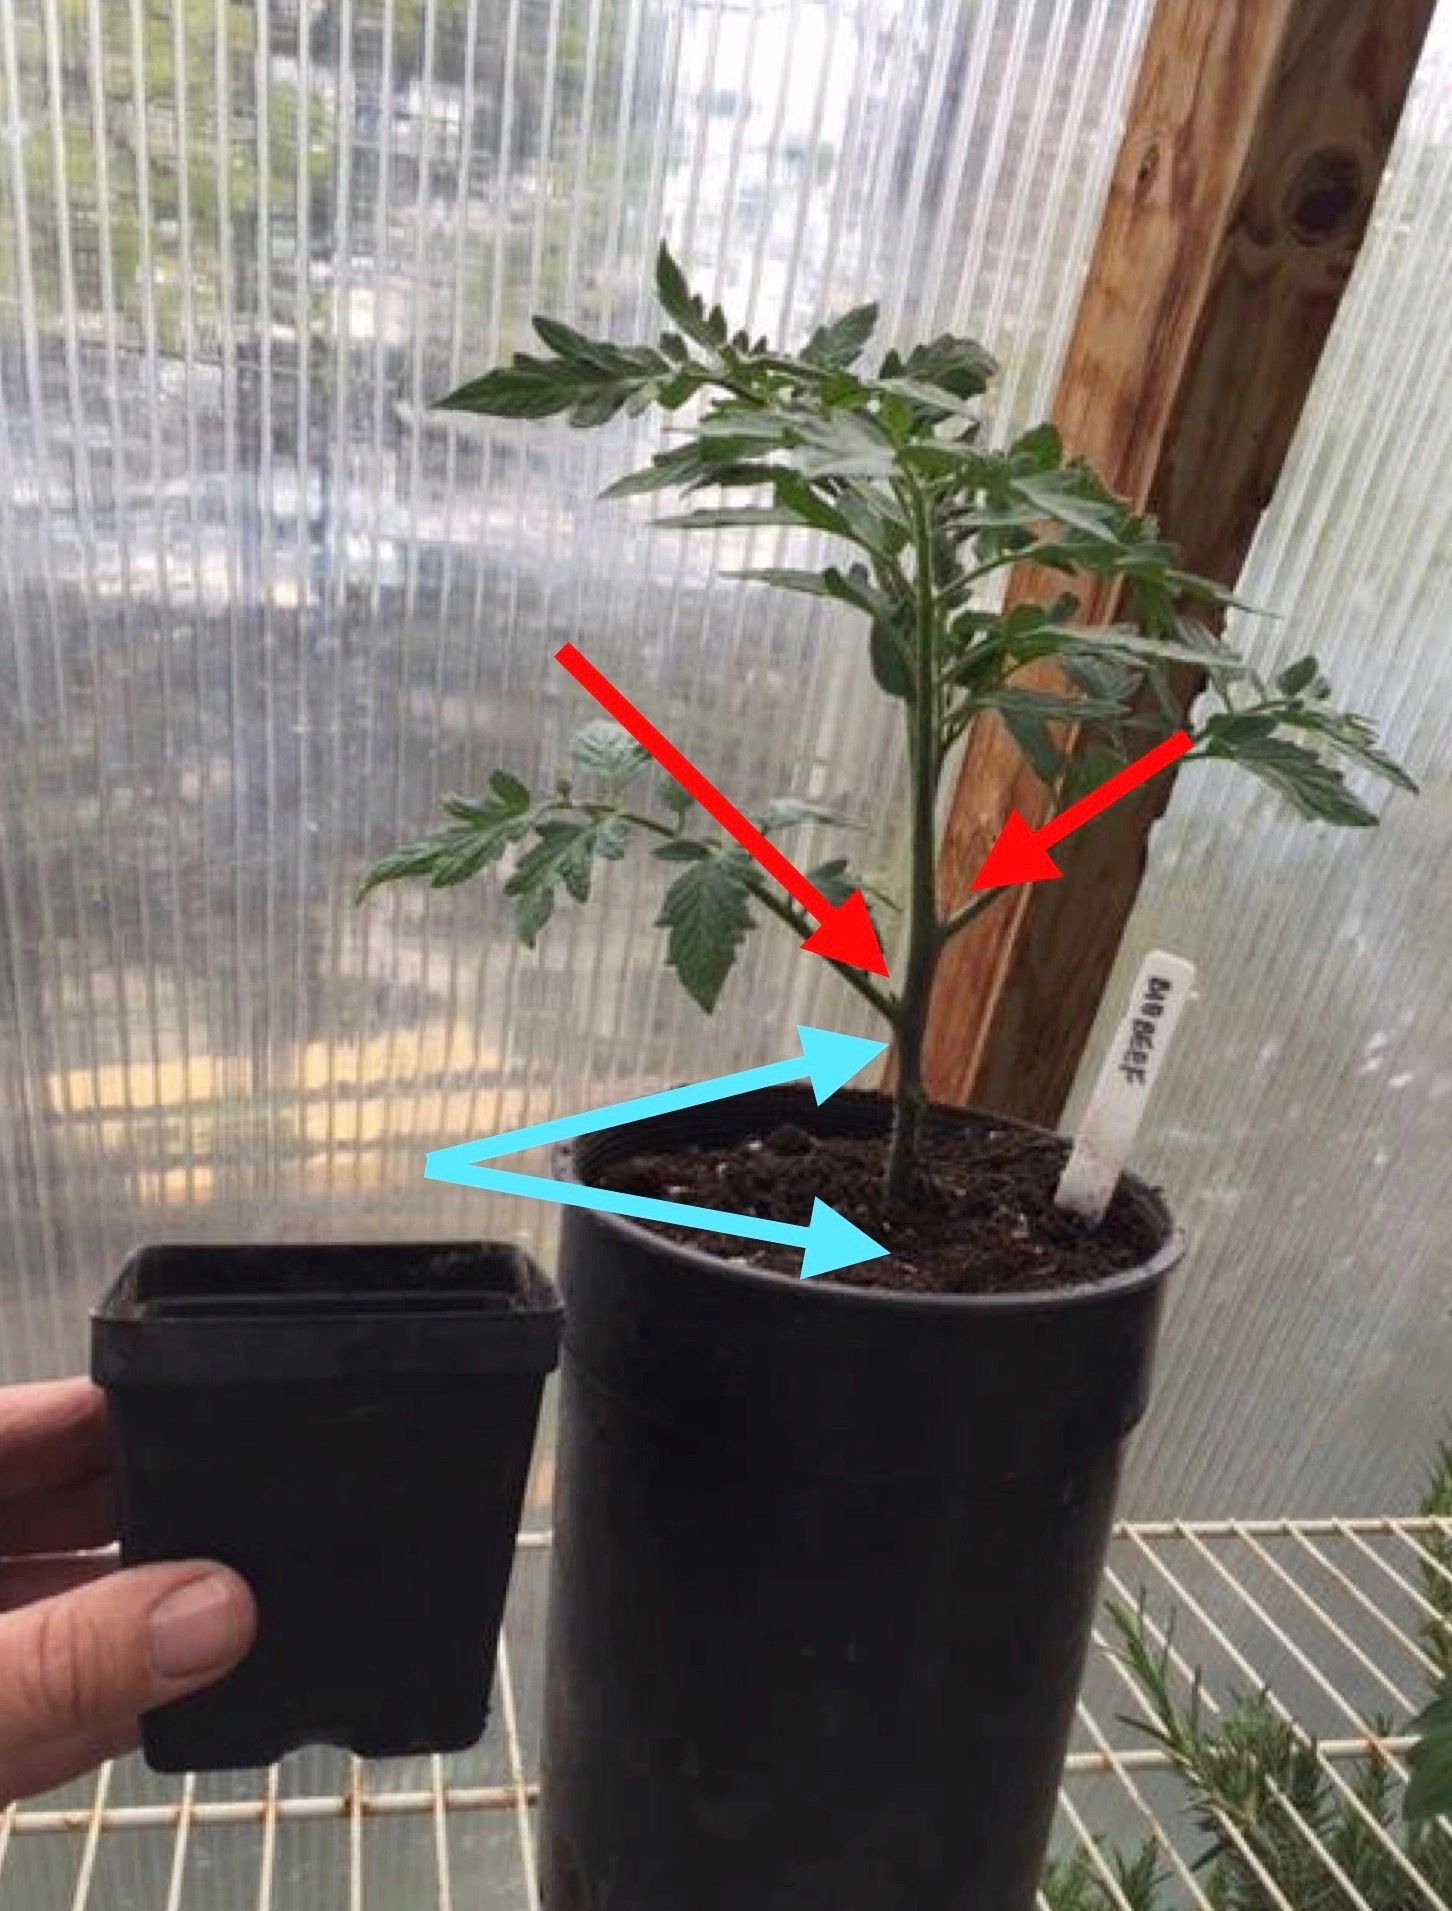 trimming tomato plants download